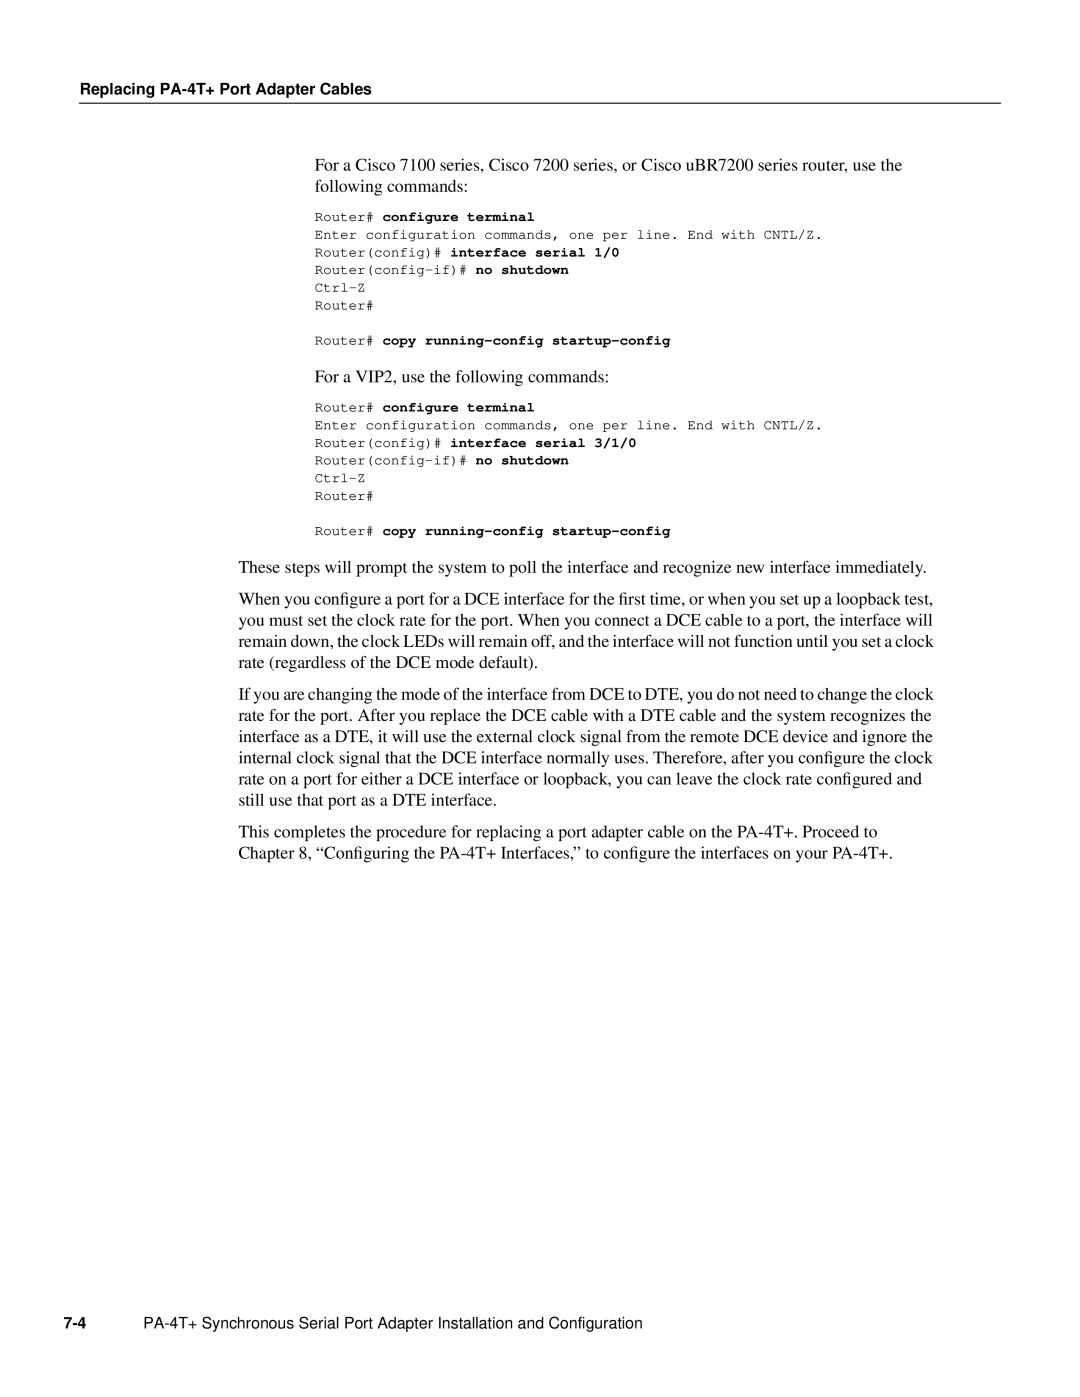 Cisco Systems PA-4T manual 